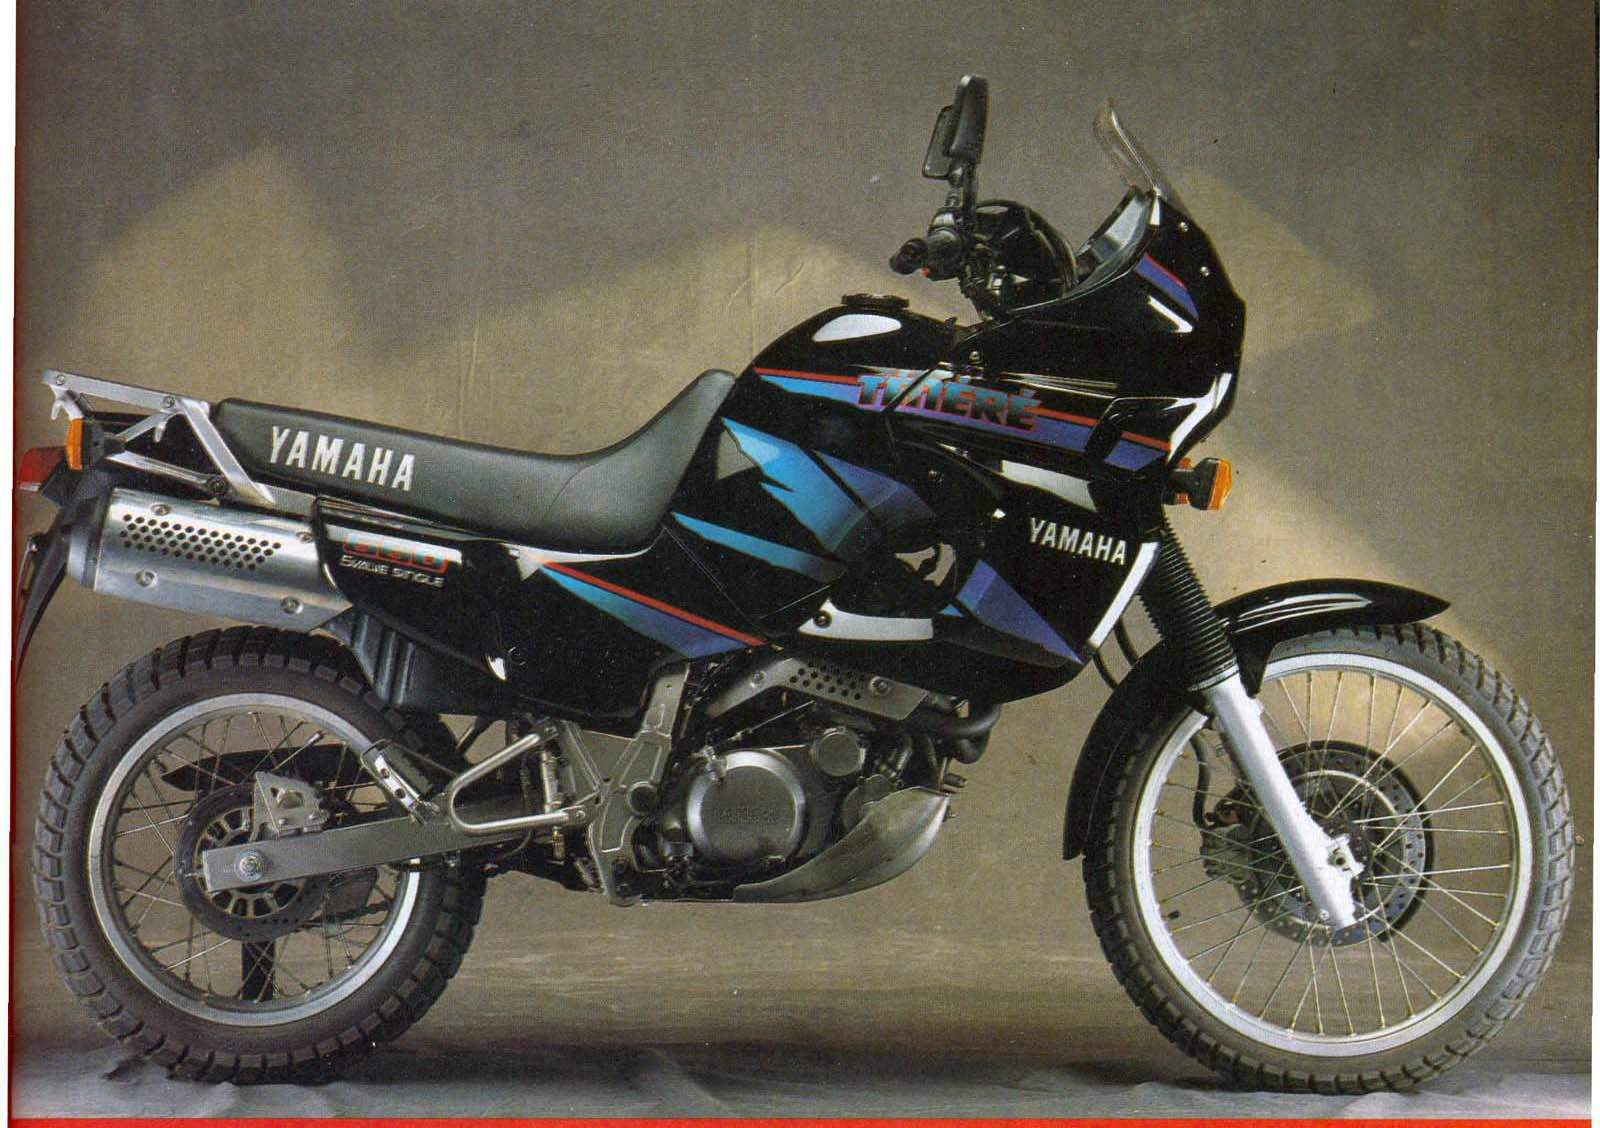 Yamaha XTZ 660 Ténéré For Sale Specifications, Price and Images